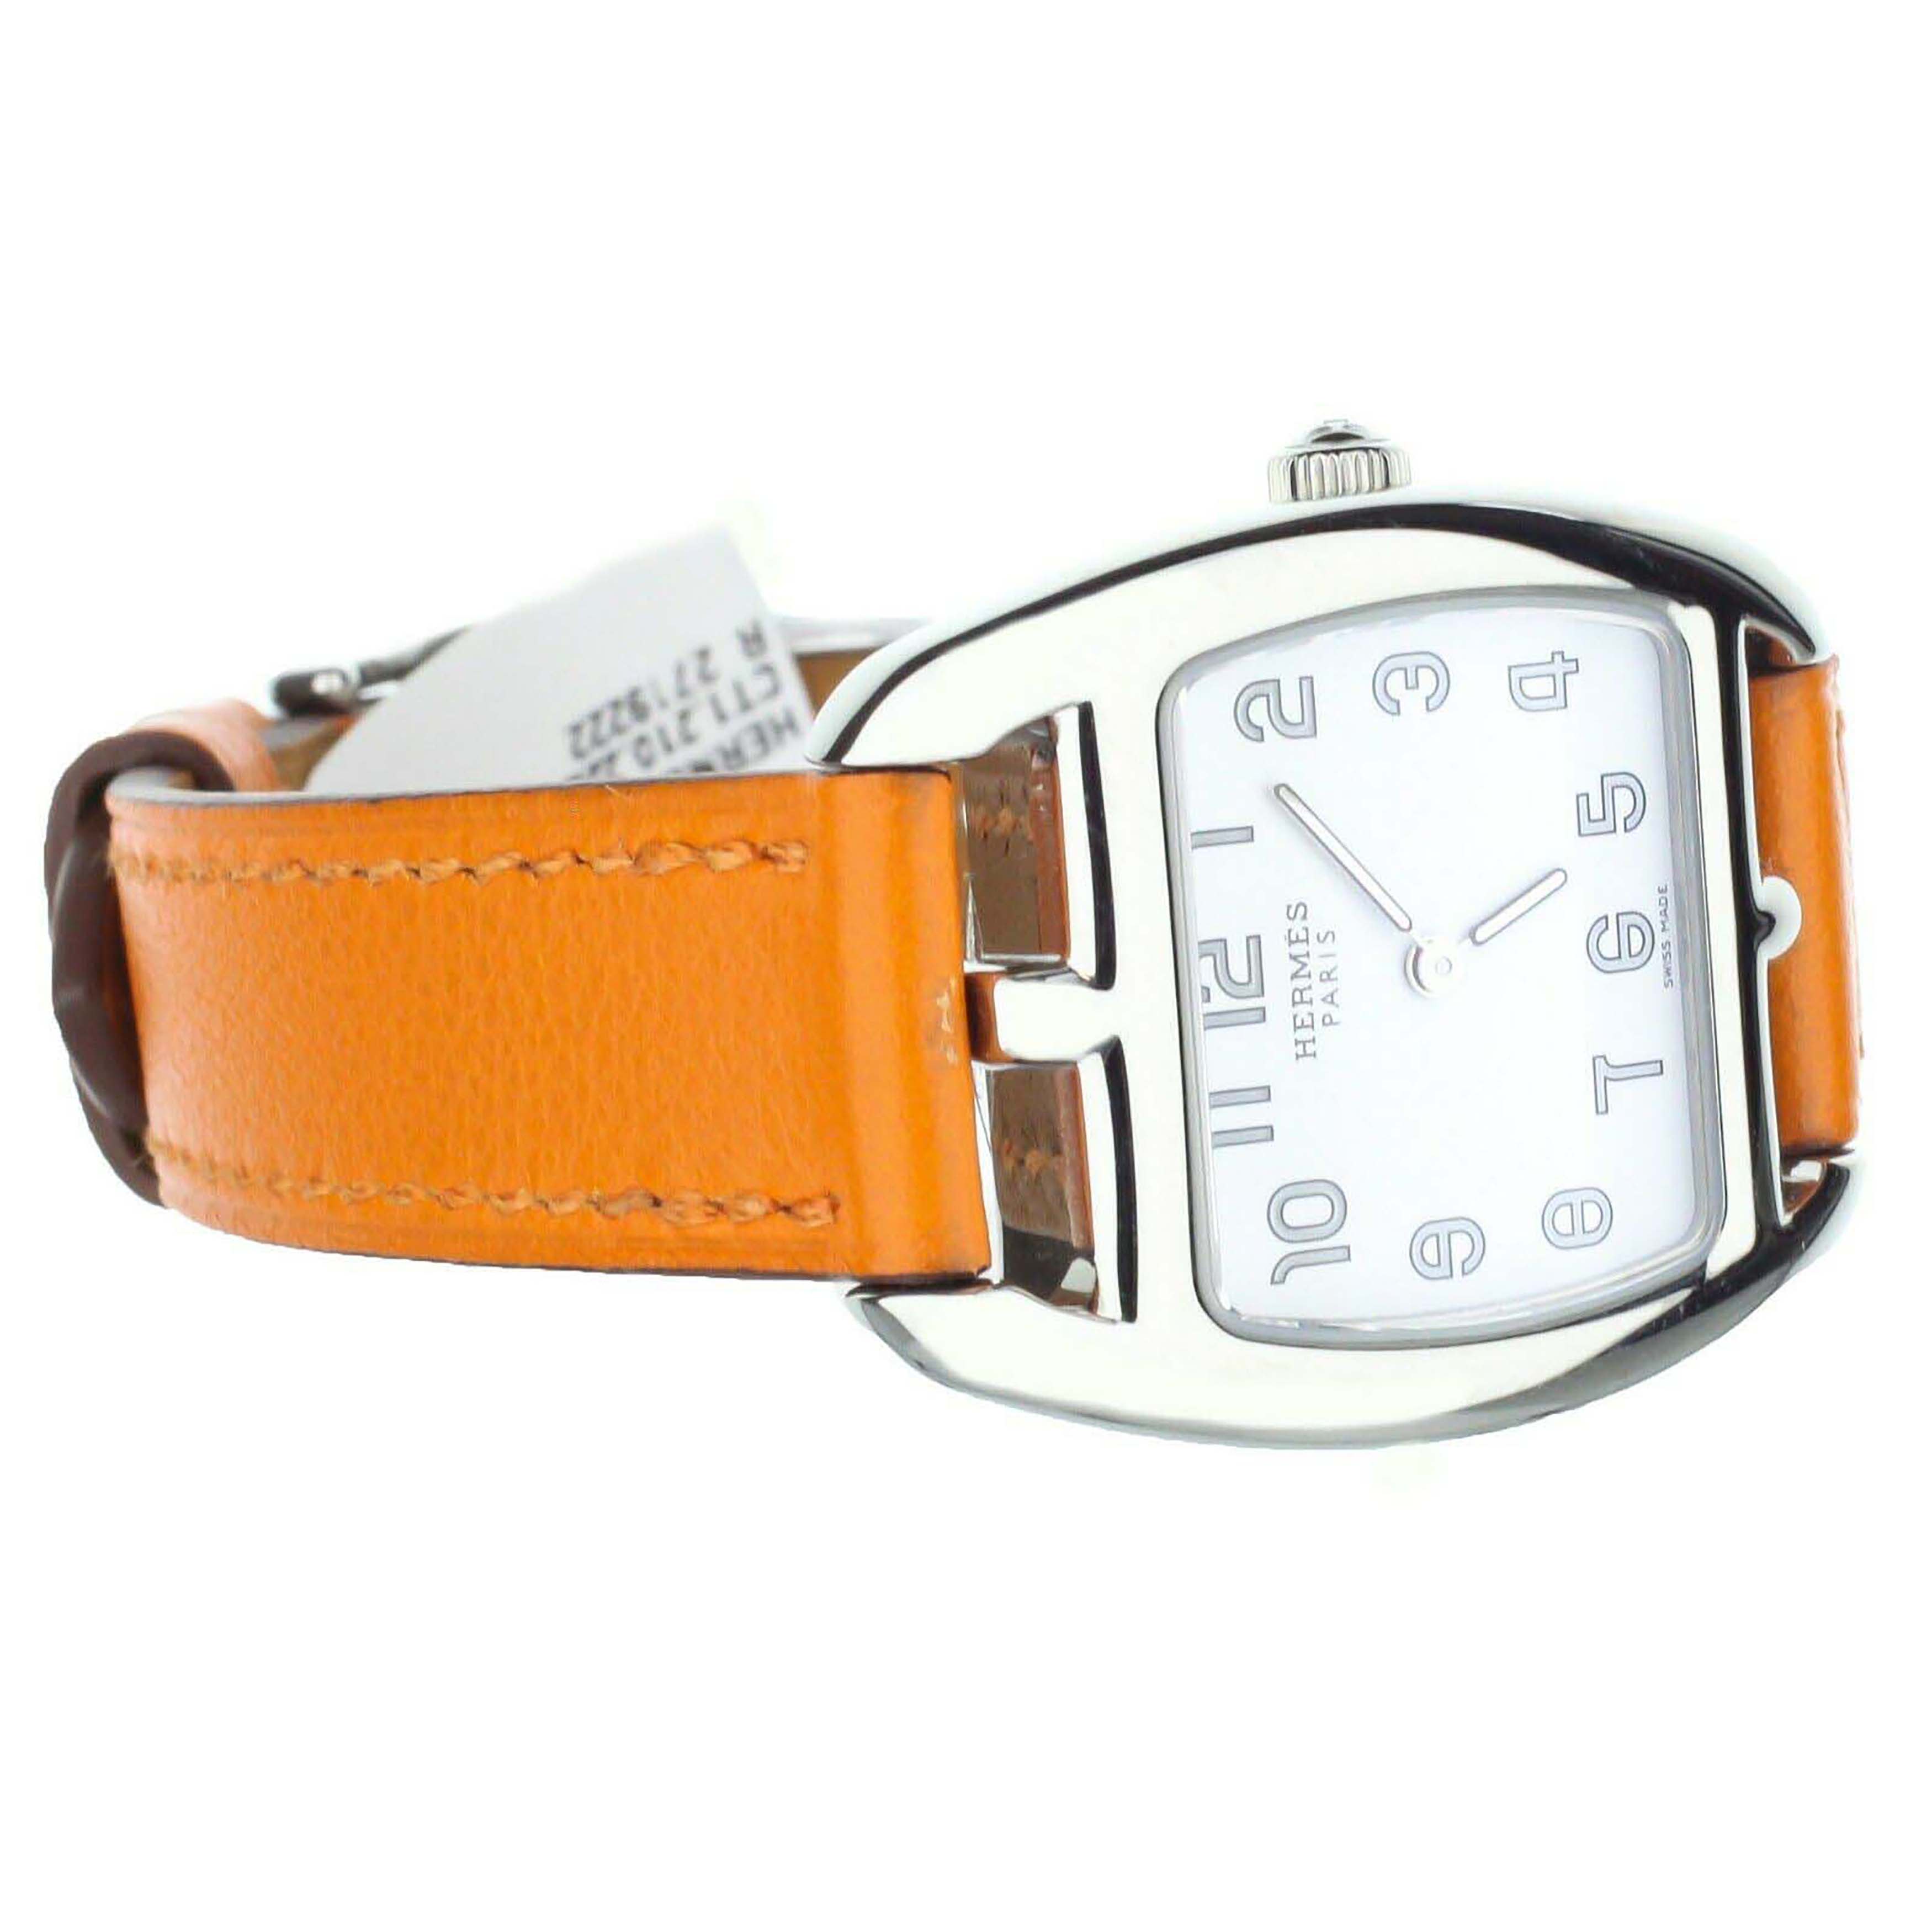 Hermès - Classic Cape Cod Quartz Unisex Watch (Model# CC1